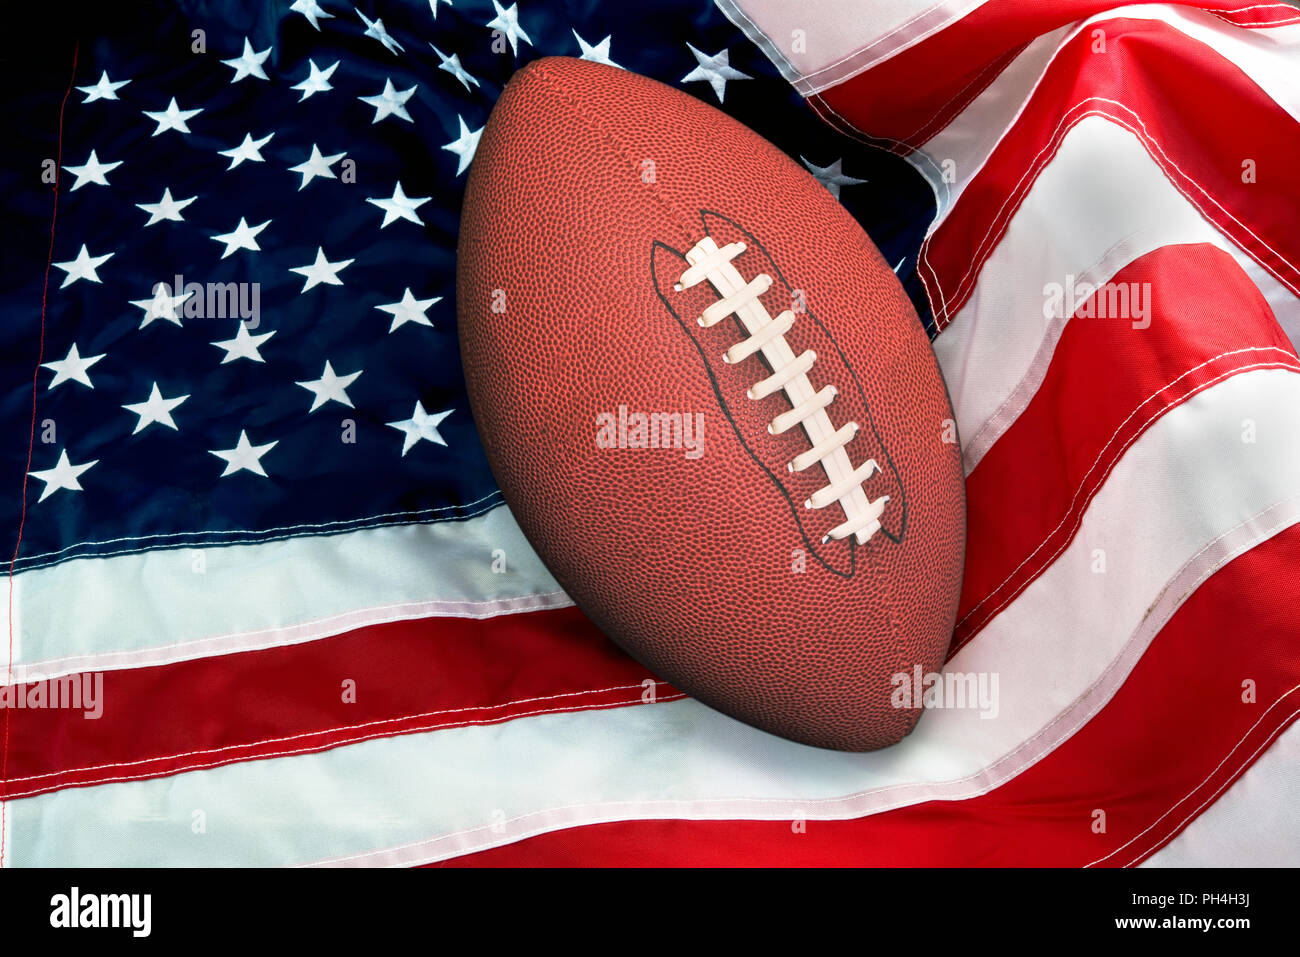 American football on American flag, old glory. Stock Photo